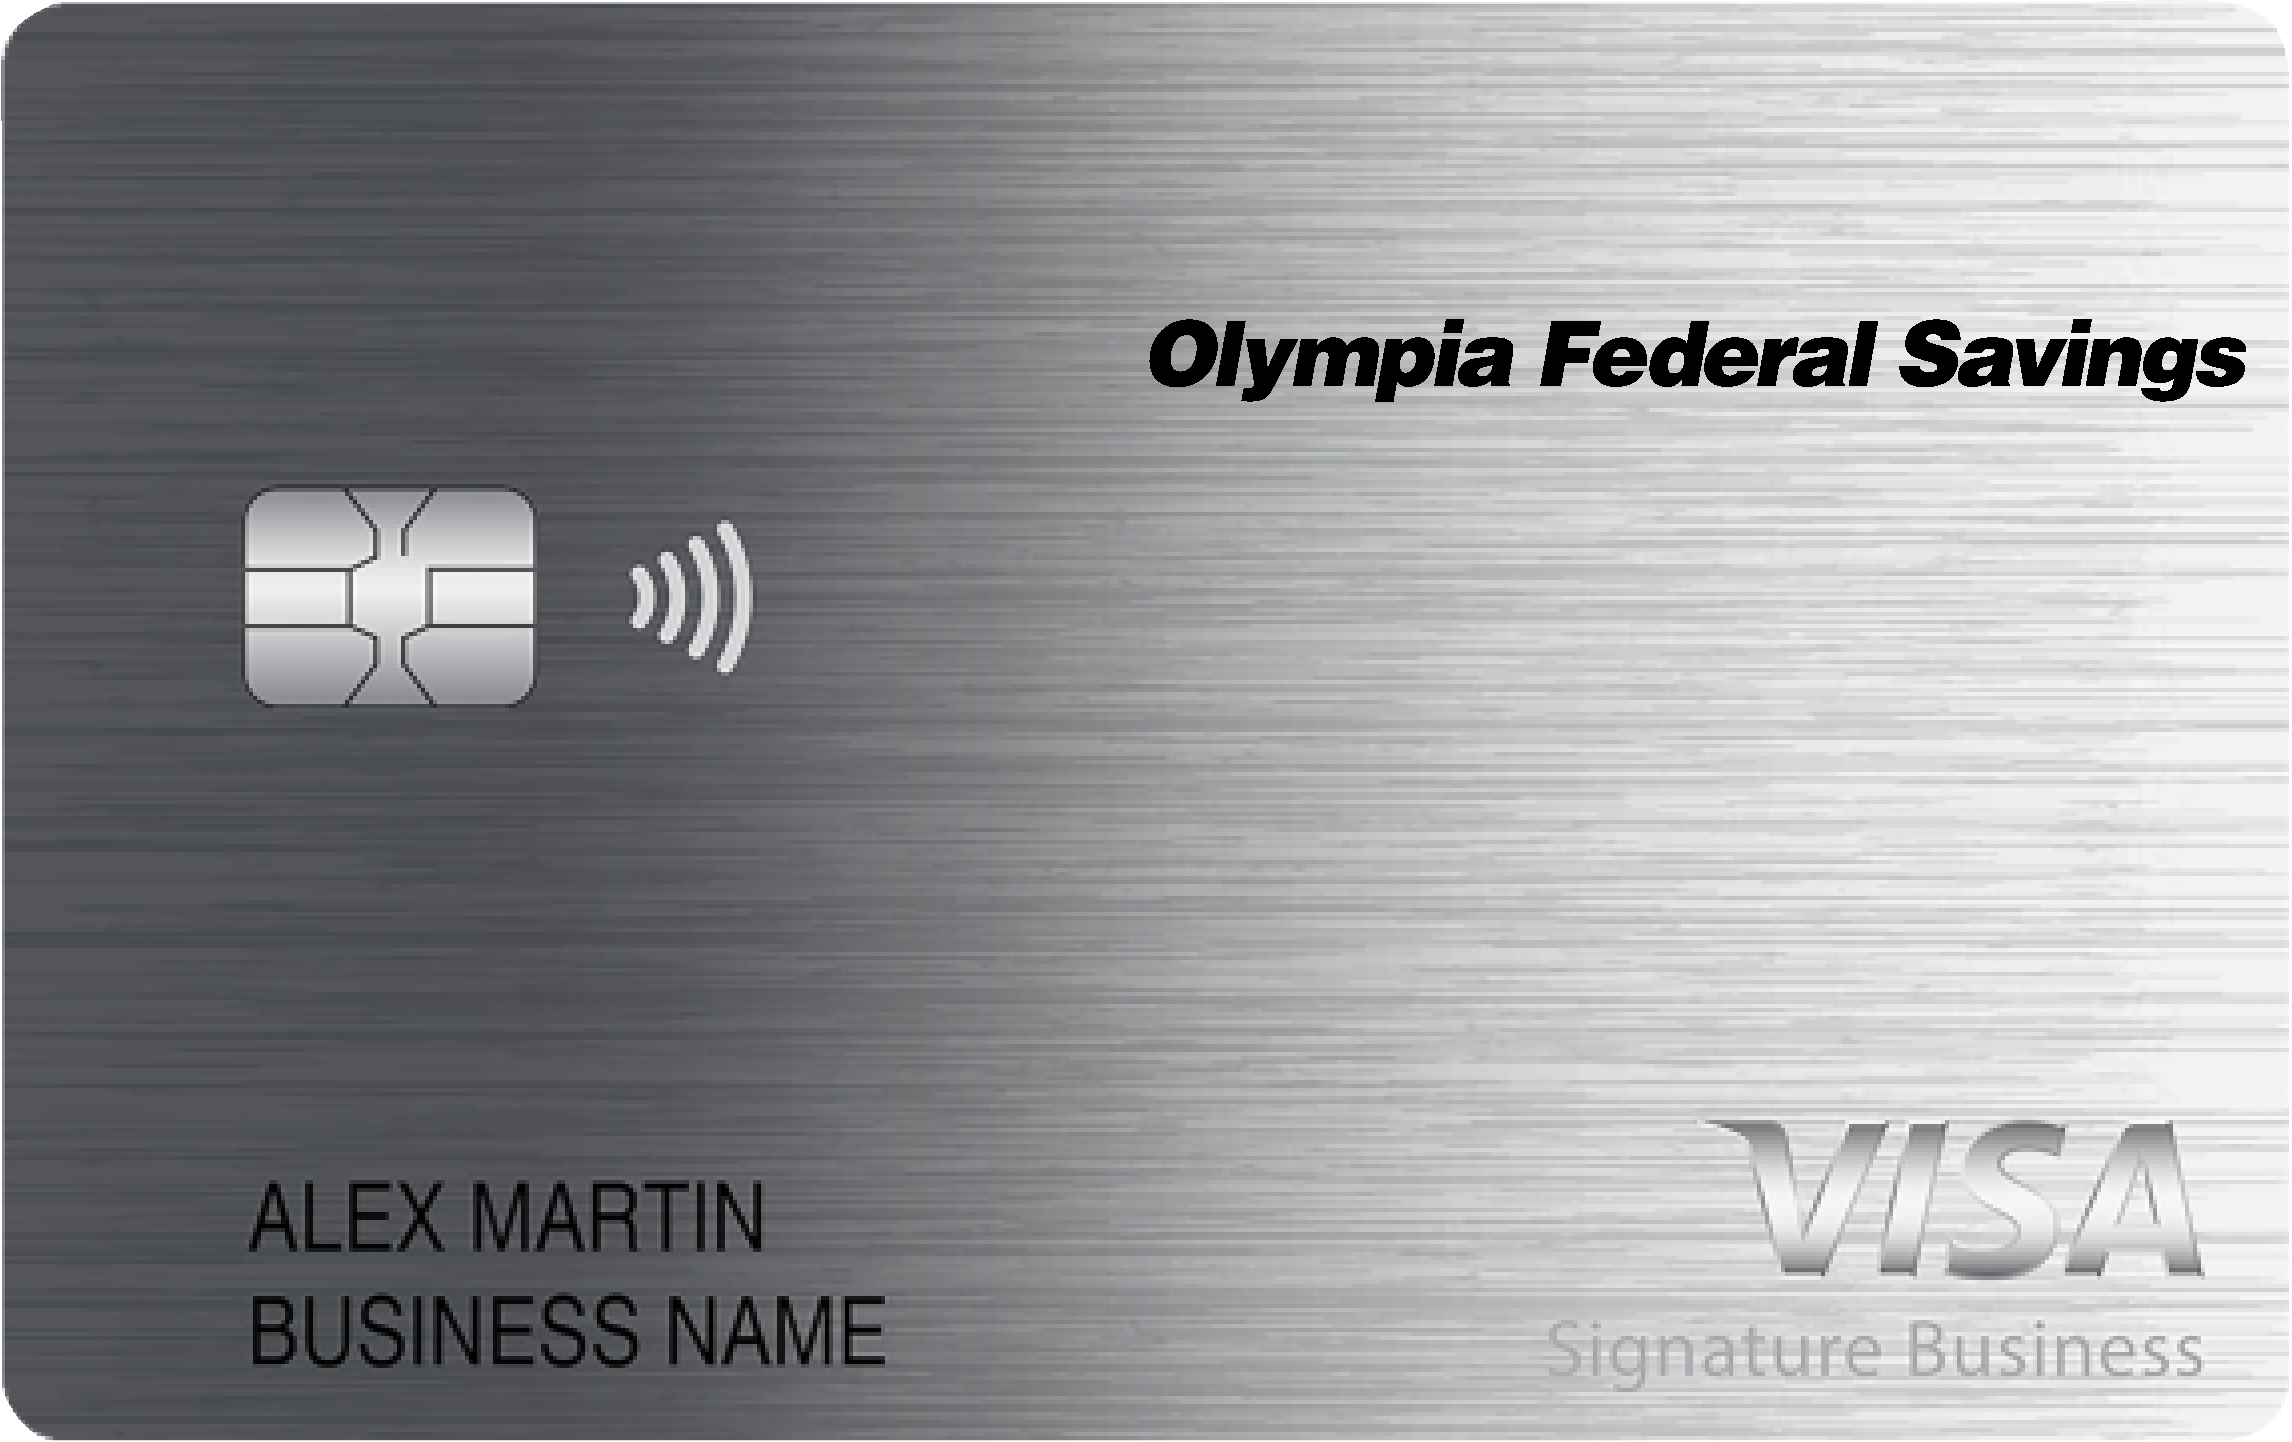 Olympia Federal Savings Smart Business Rewards Card